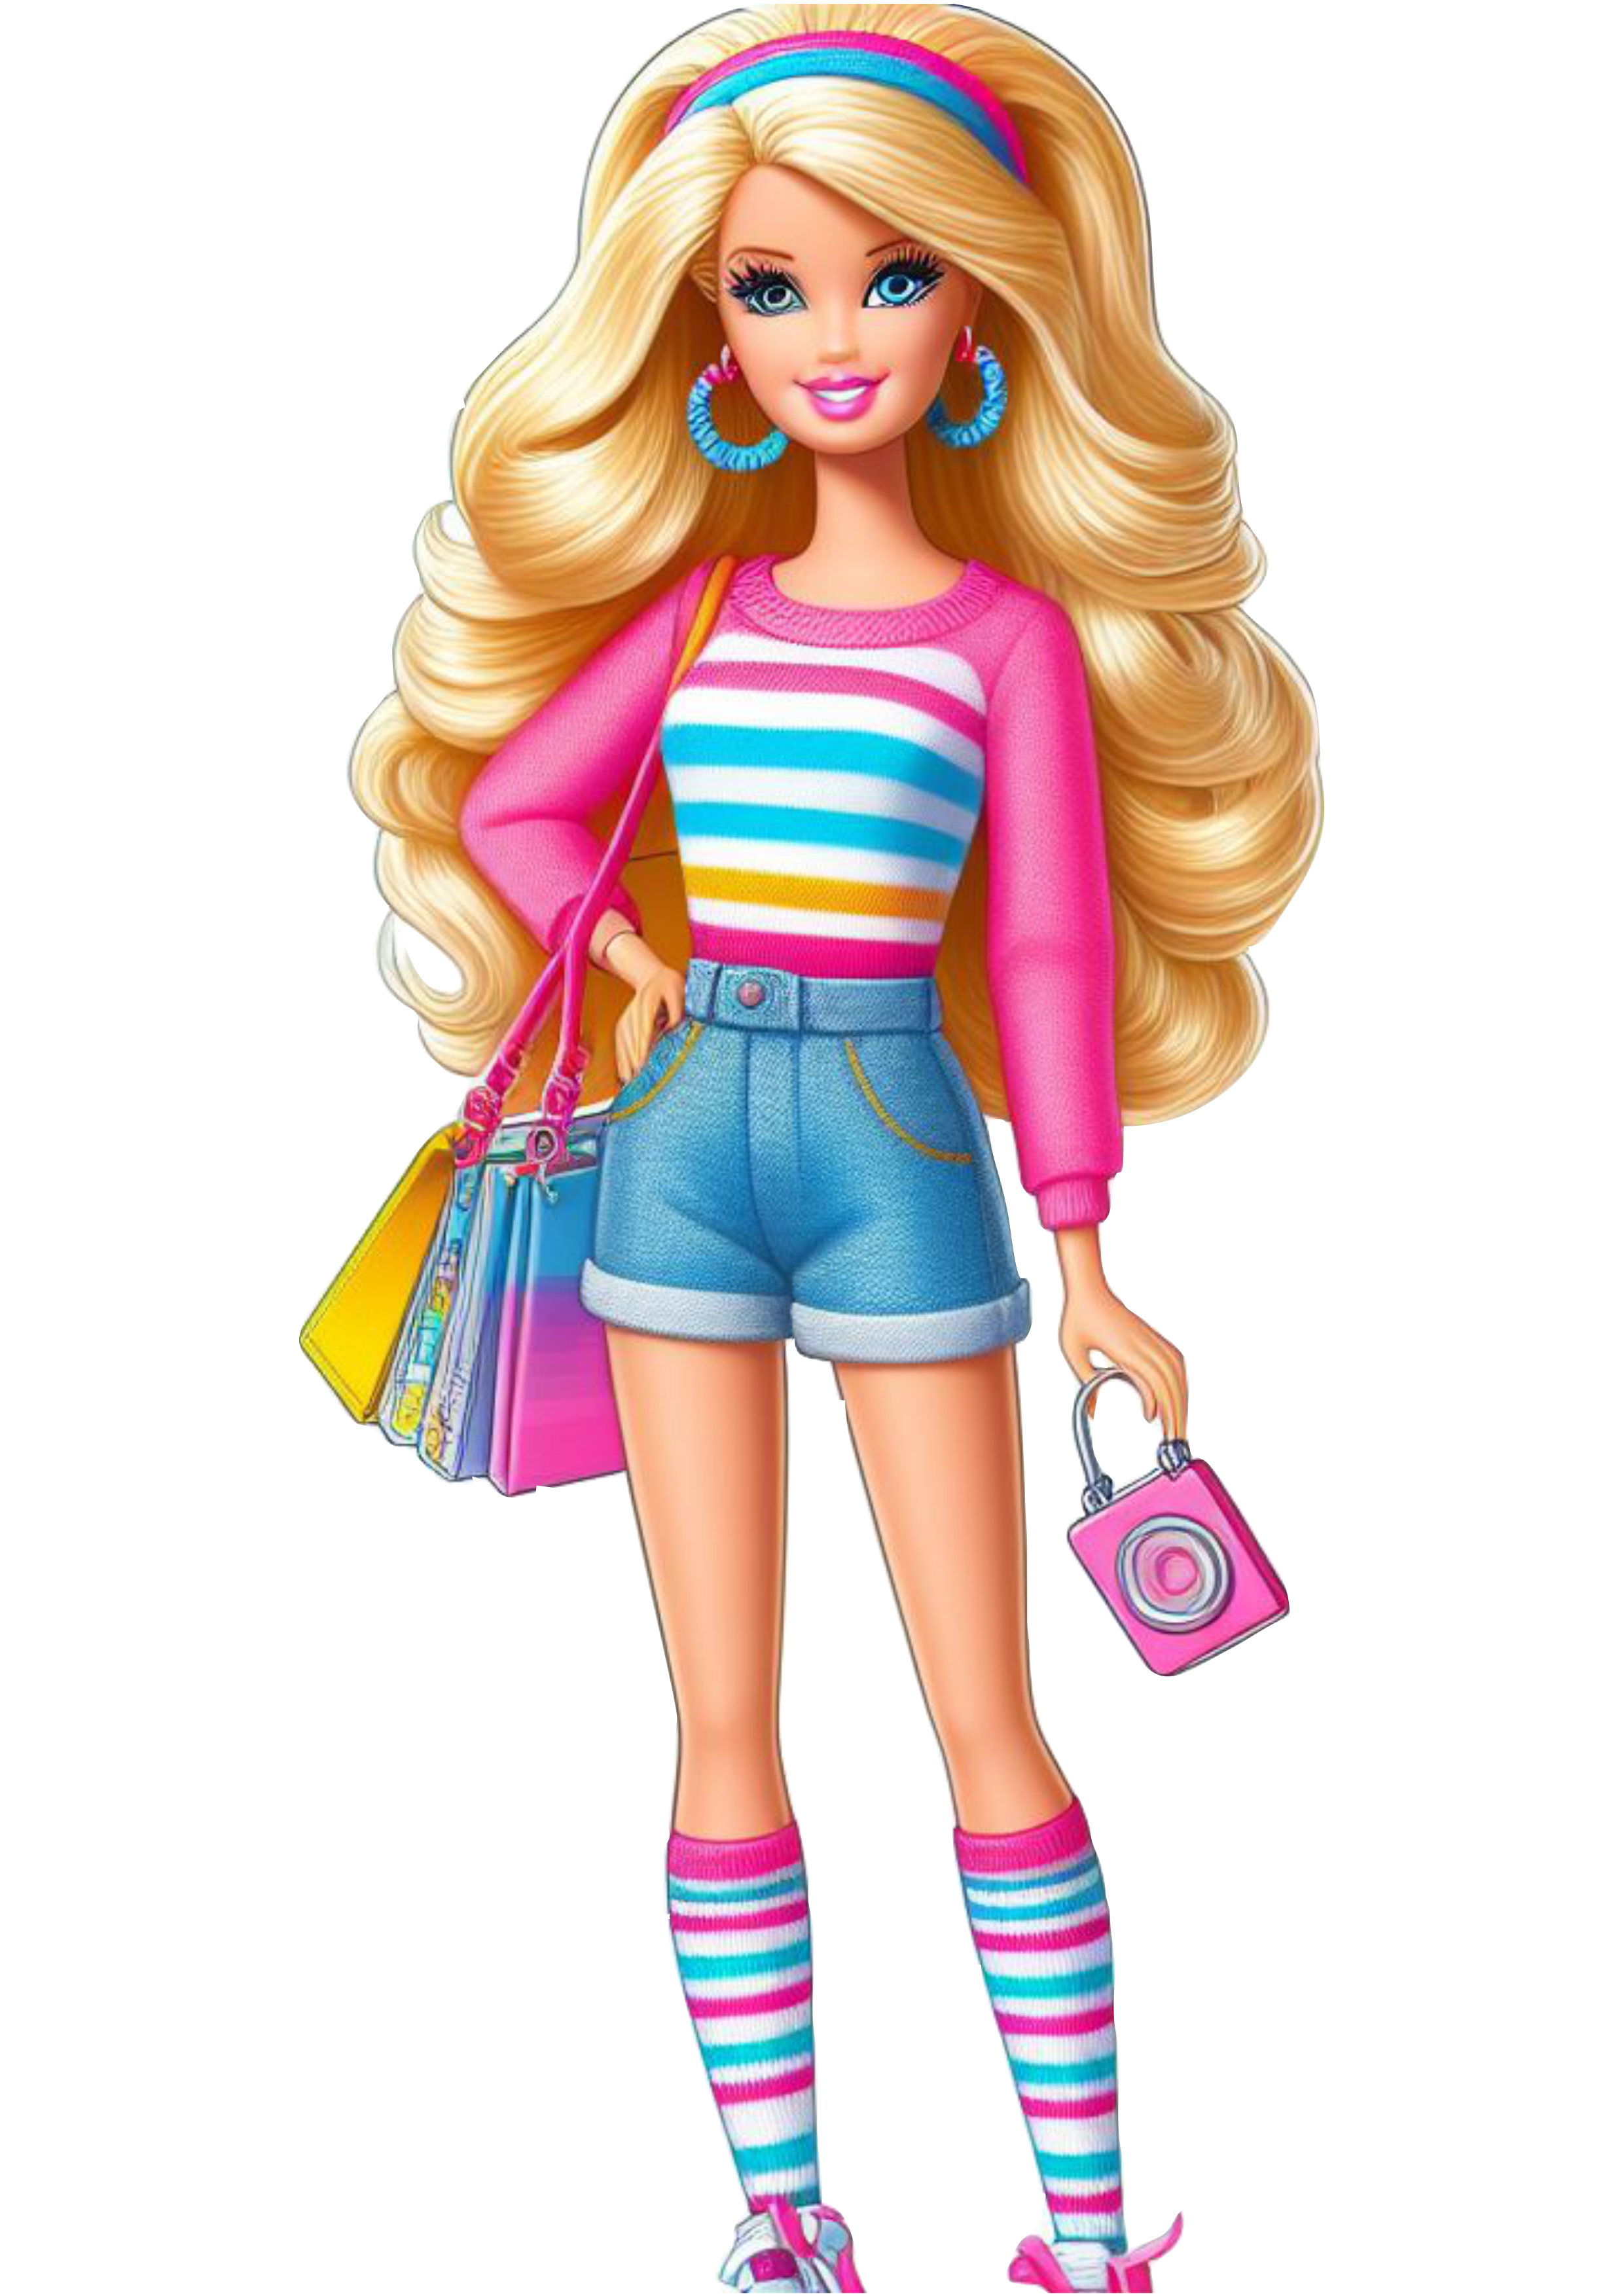 Barbie Student PNG Transparent Background clipart ilustration